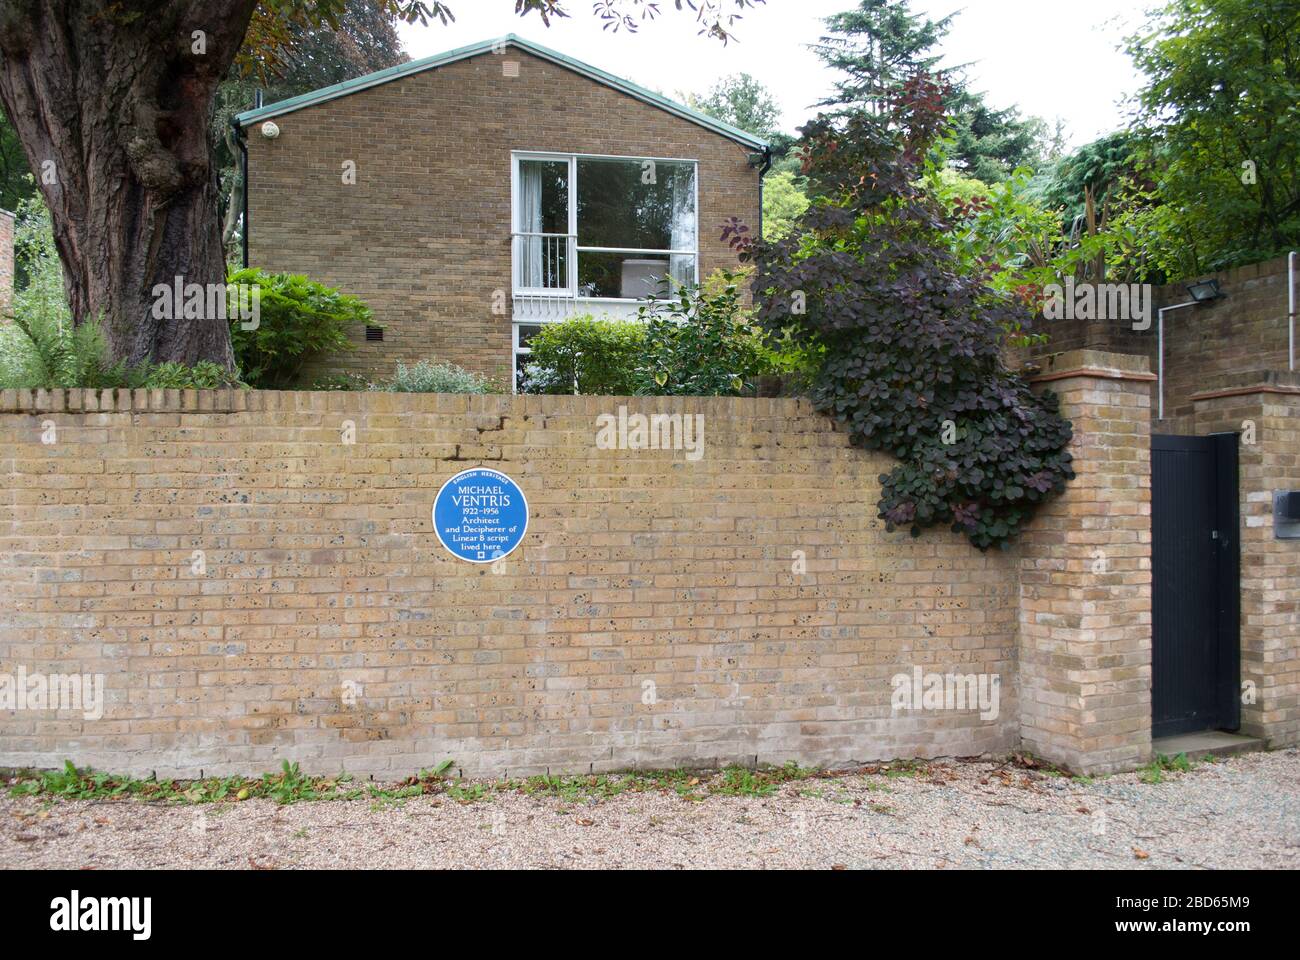 Michael Ventris OBE House 19 North End, Hampstead, Londres NW3 7HR Banque D'Images